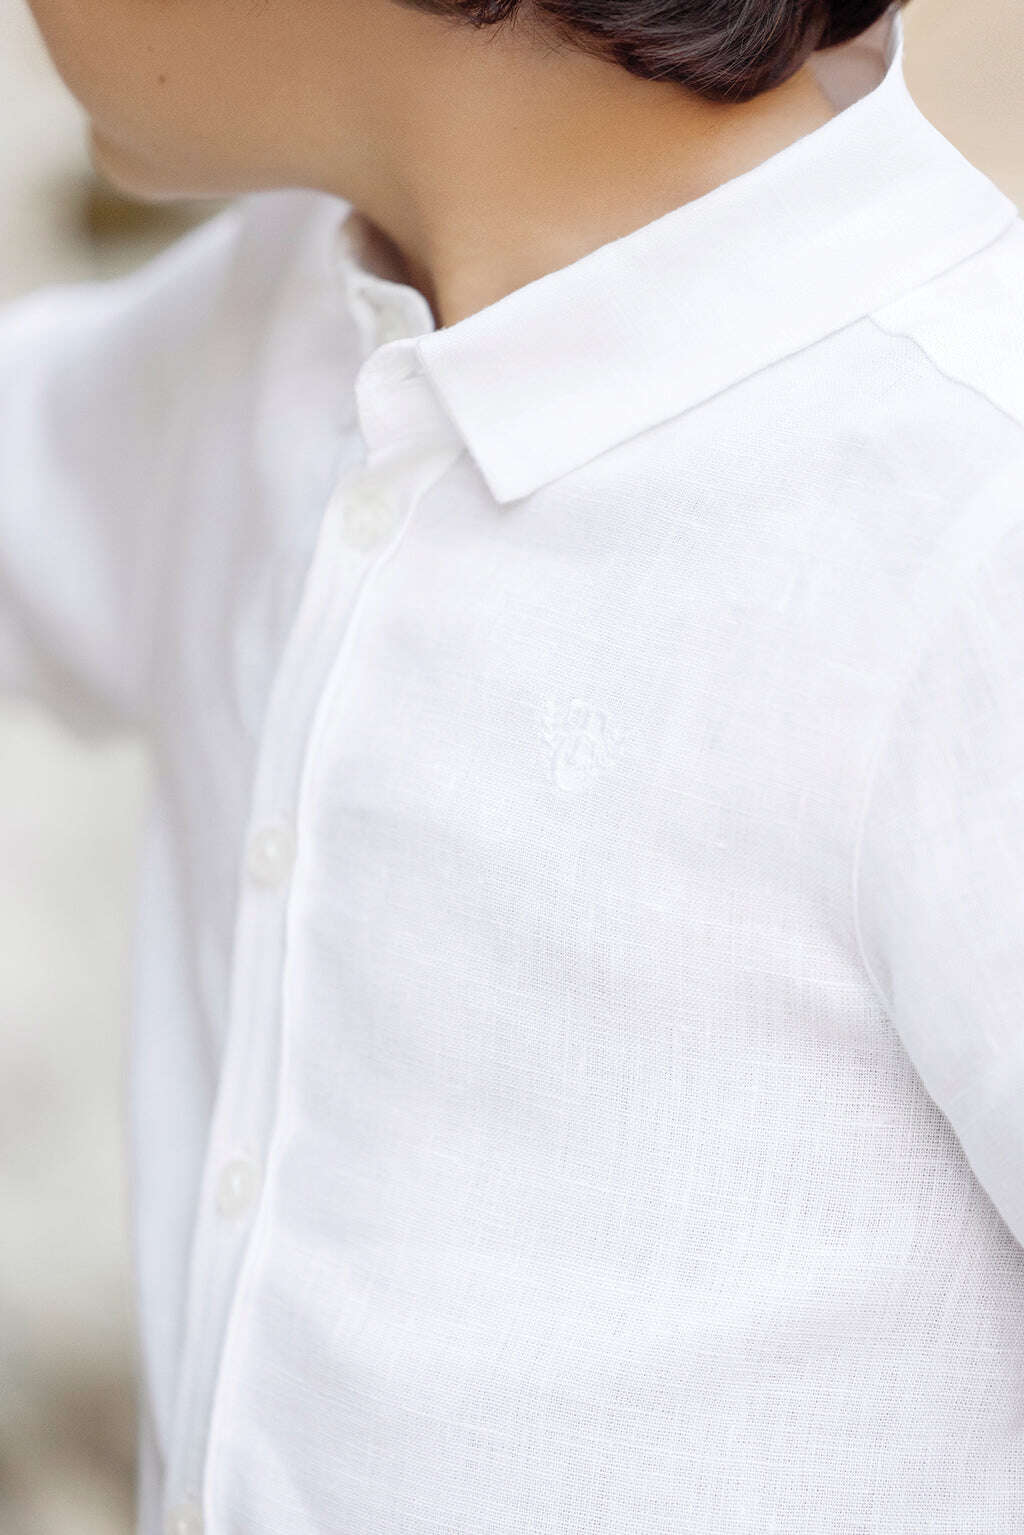 Shirt - White short sleeves